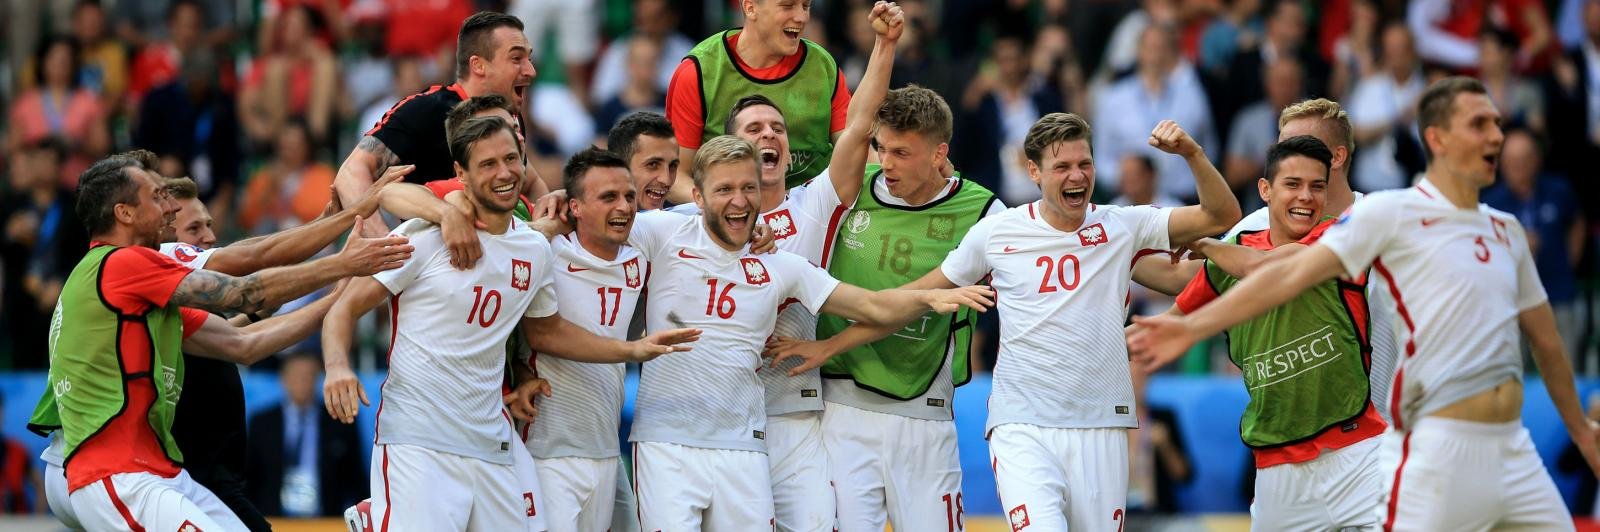 Switzerland 1-1 Poland (AET): EURO 2016 Round of 16 Report (Poland win 5-4 on penalties)